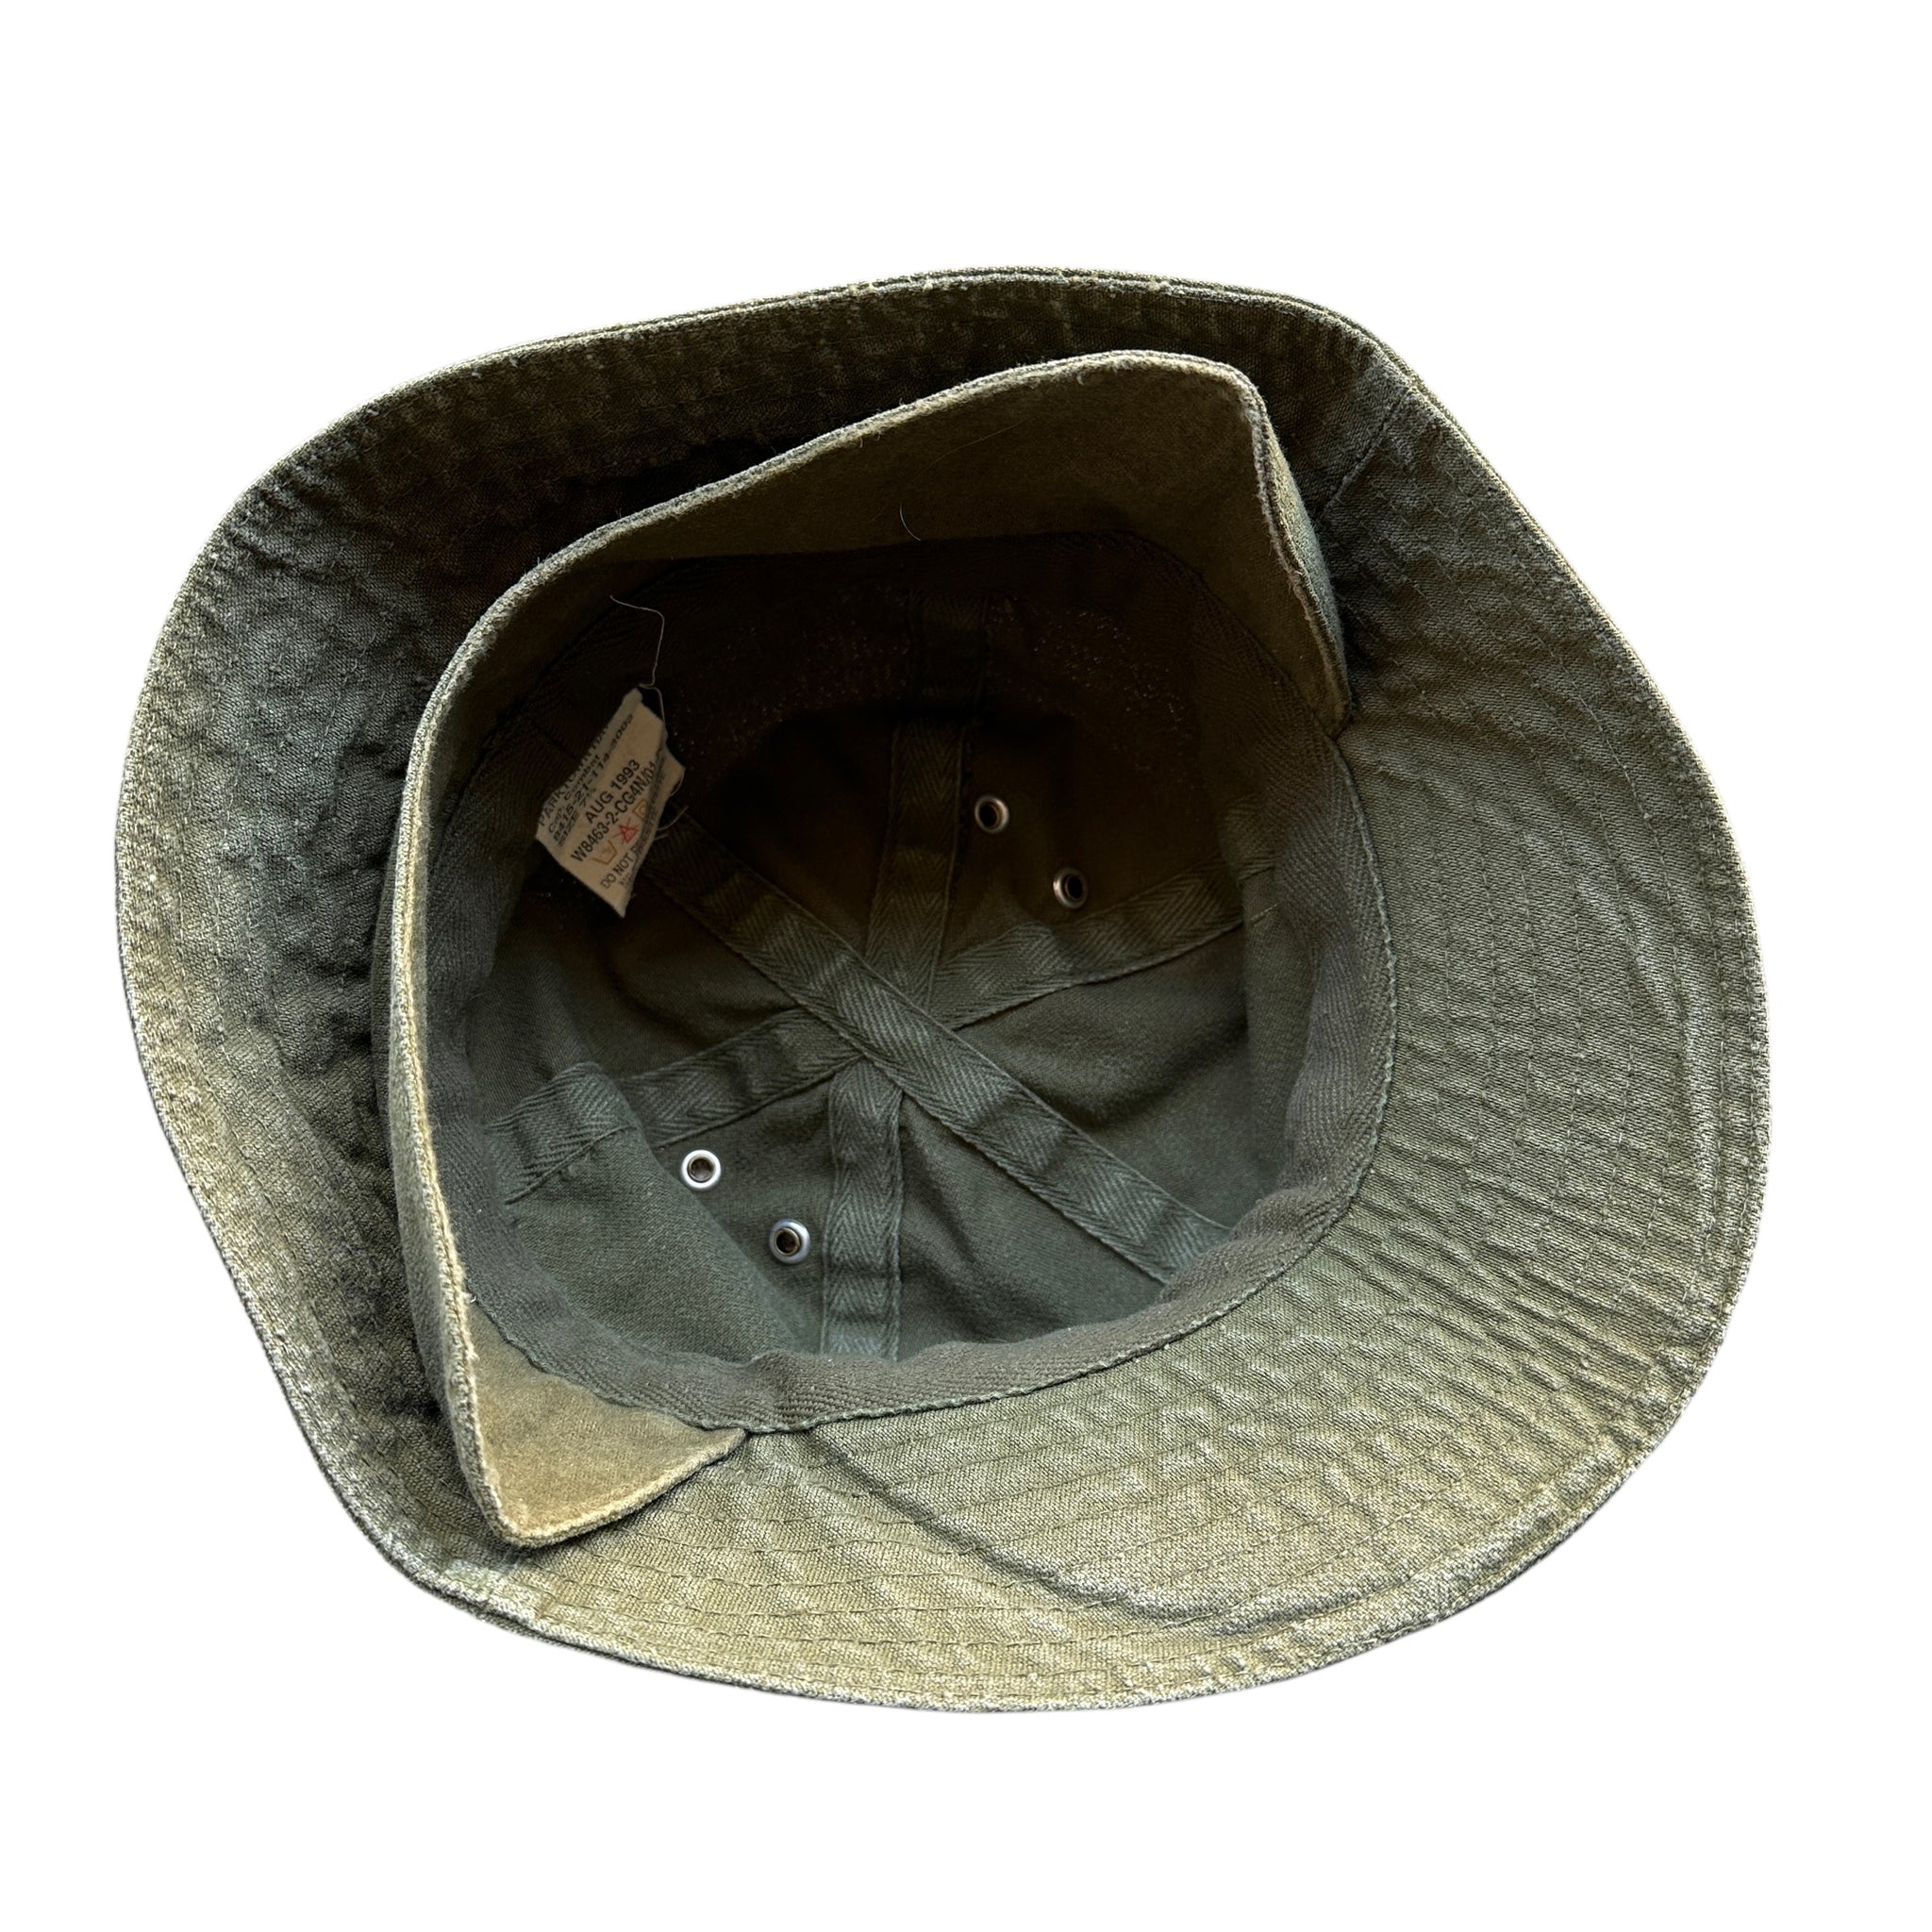 Canadian military bucket/cap cotton convertible hat 4 seasons 7 1/4